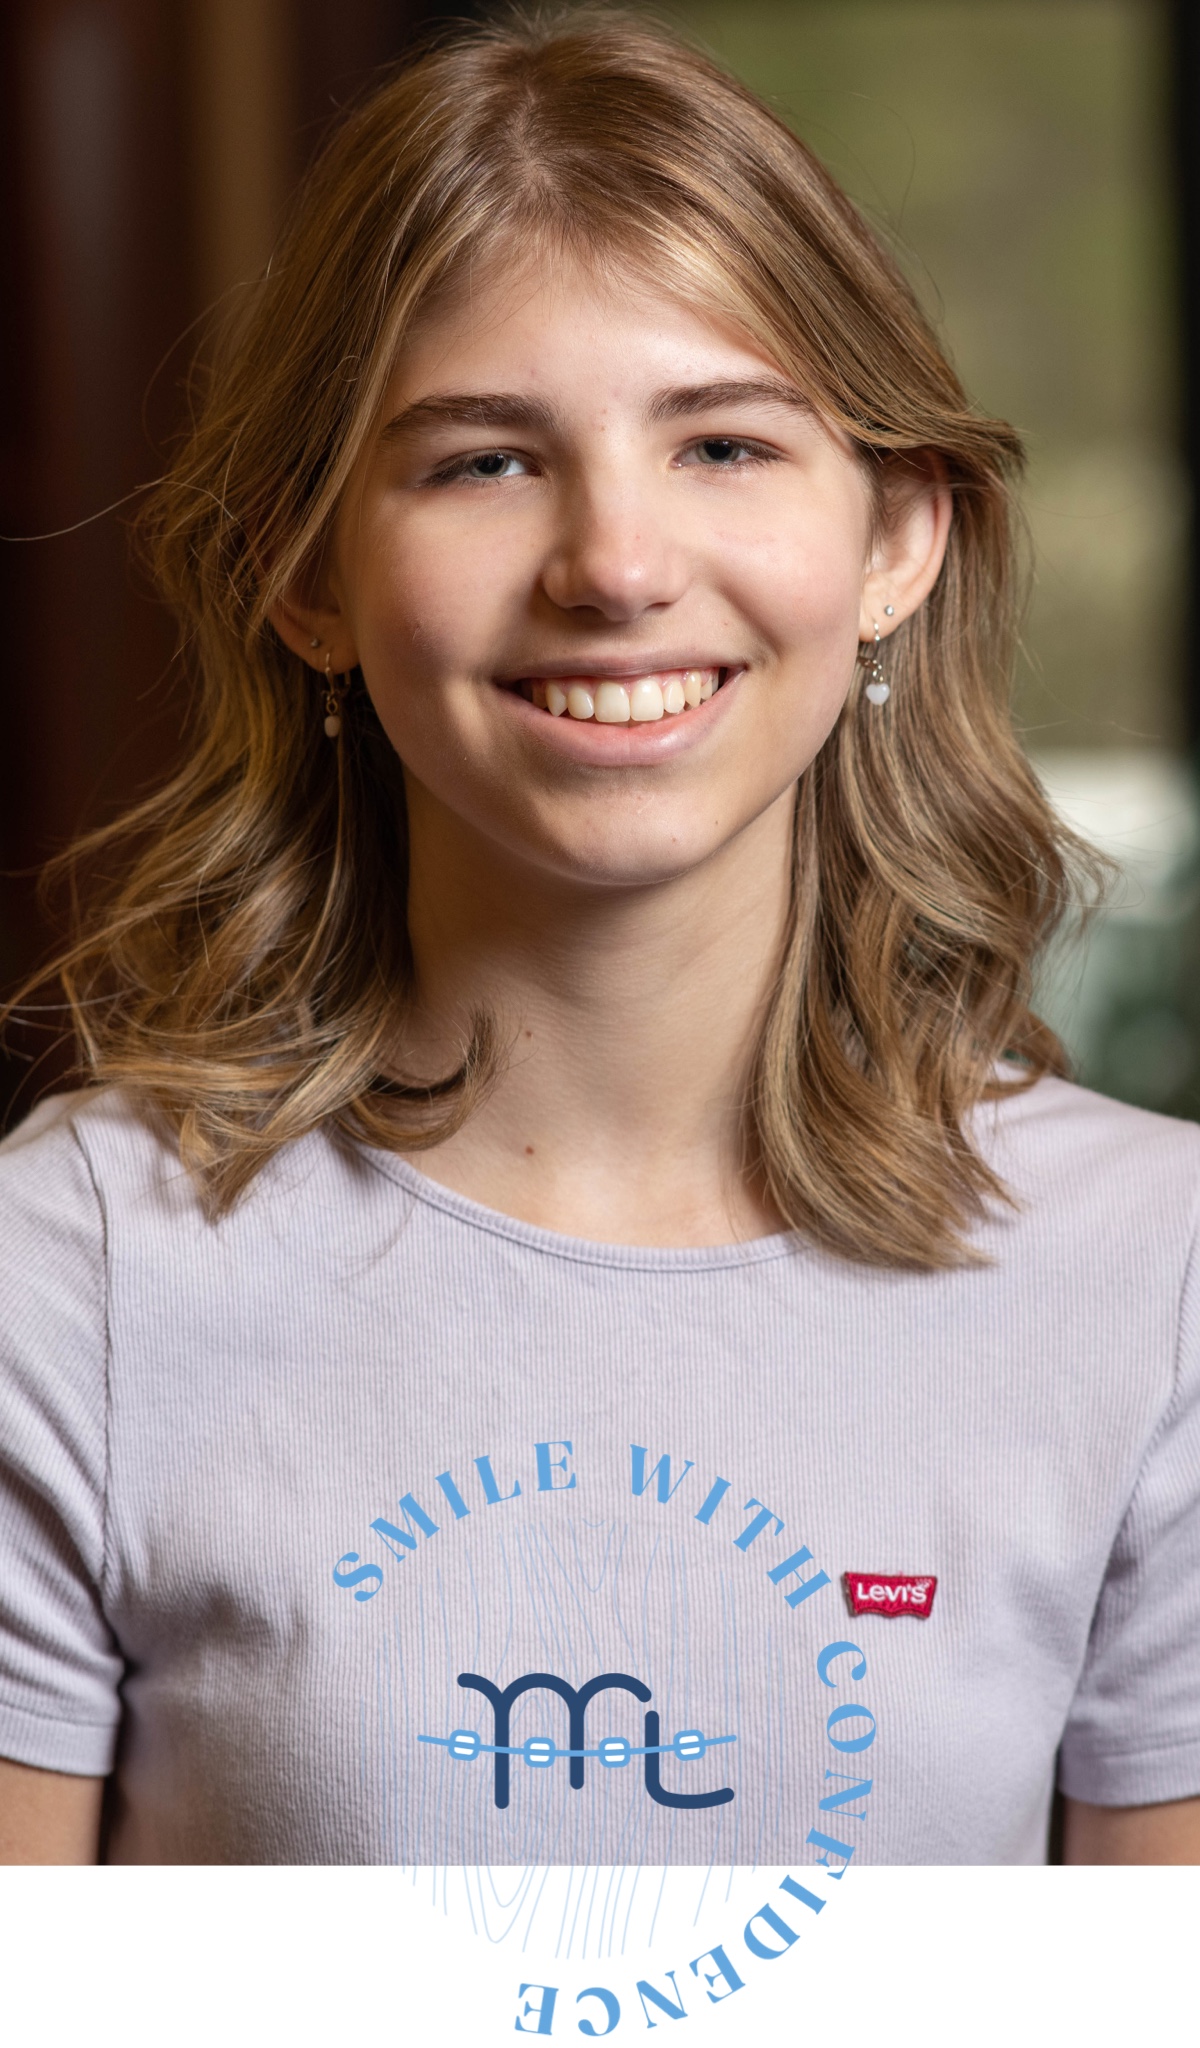 teen girl smiling during orthodontic visit